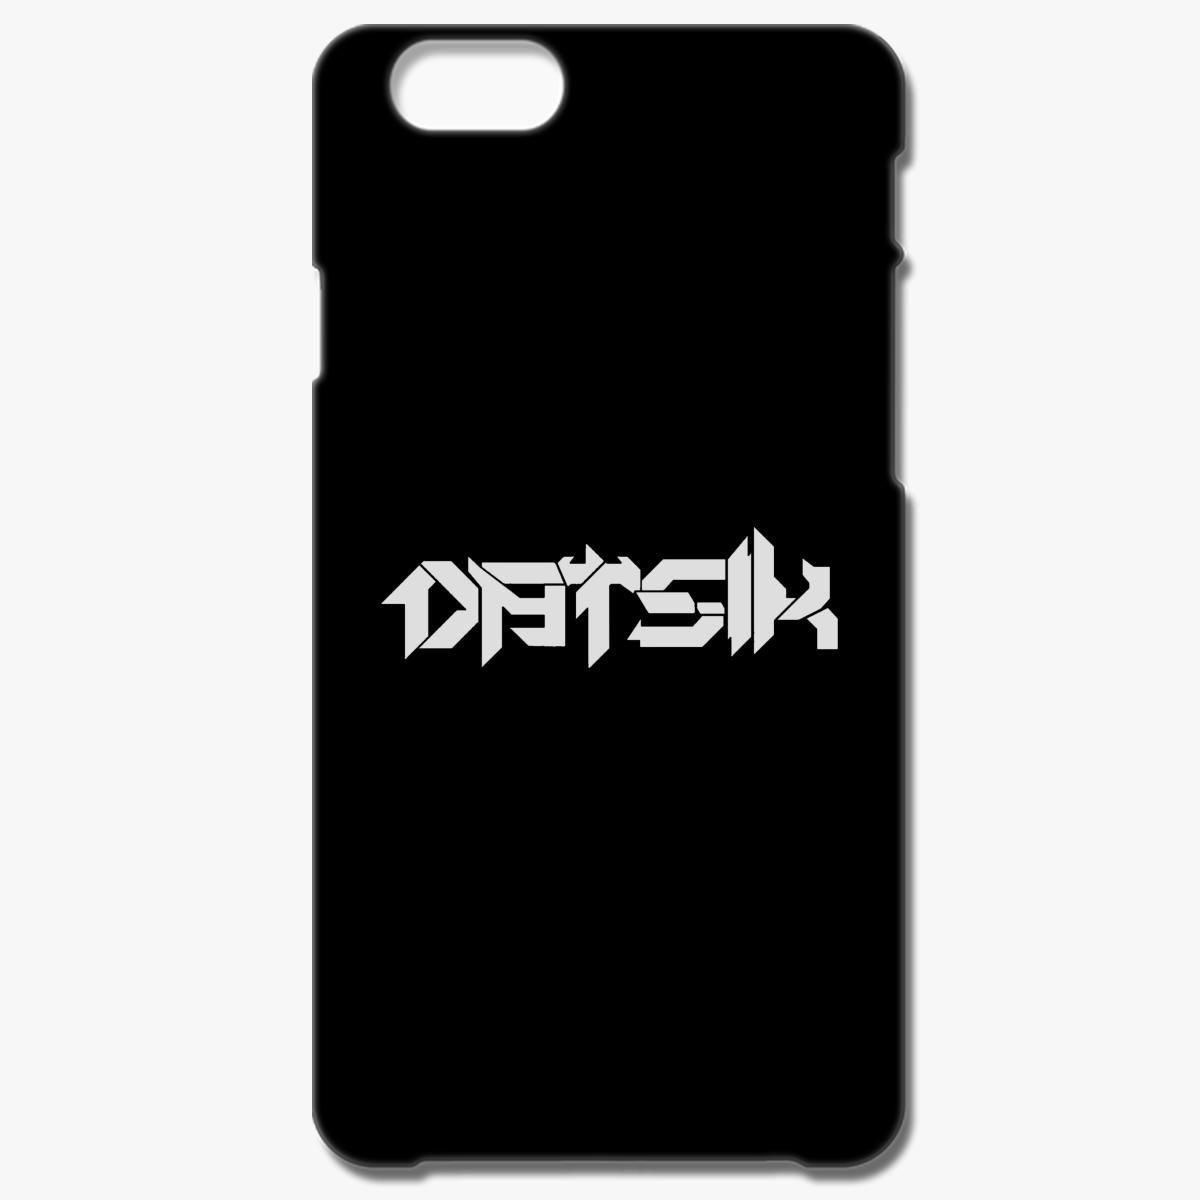 Datsik Logo - Datsik Logo iPhone 6/6S Case - Customon